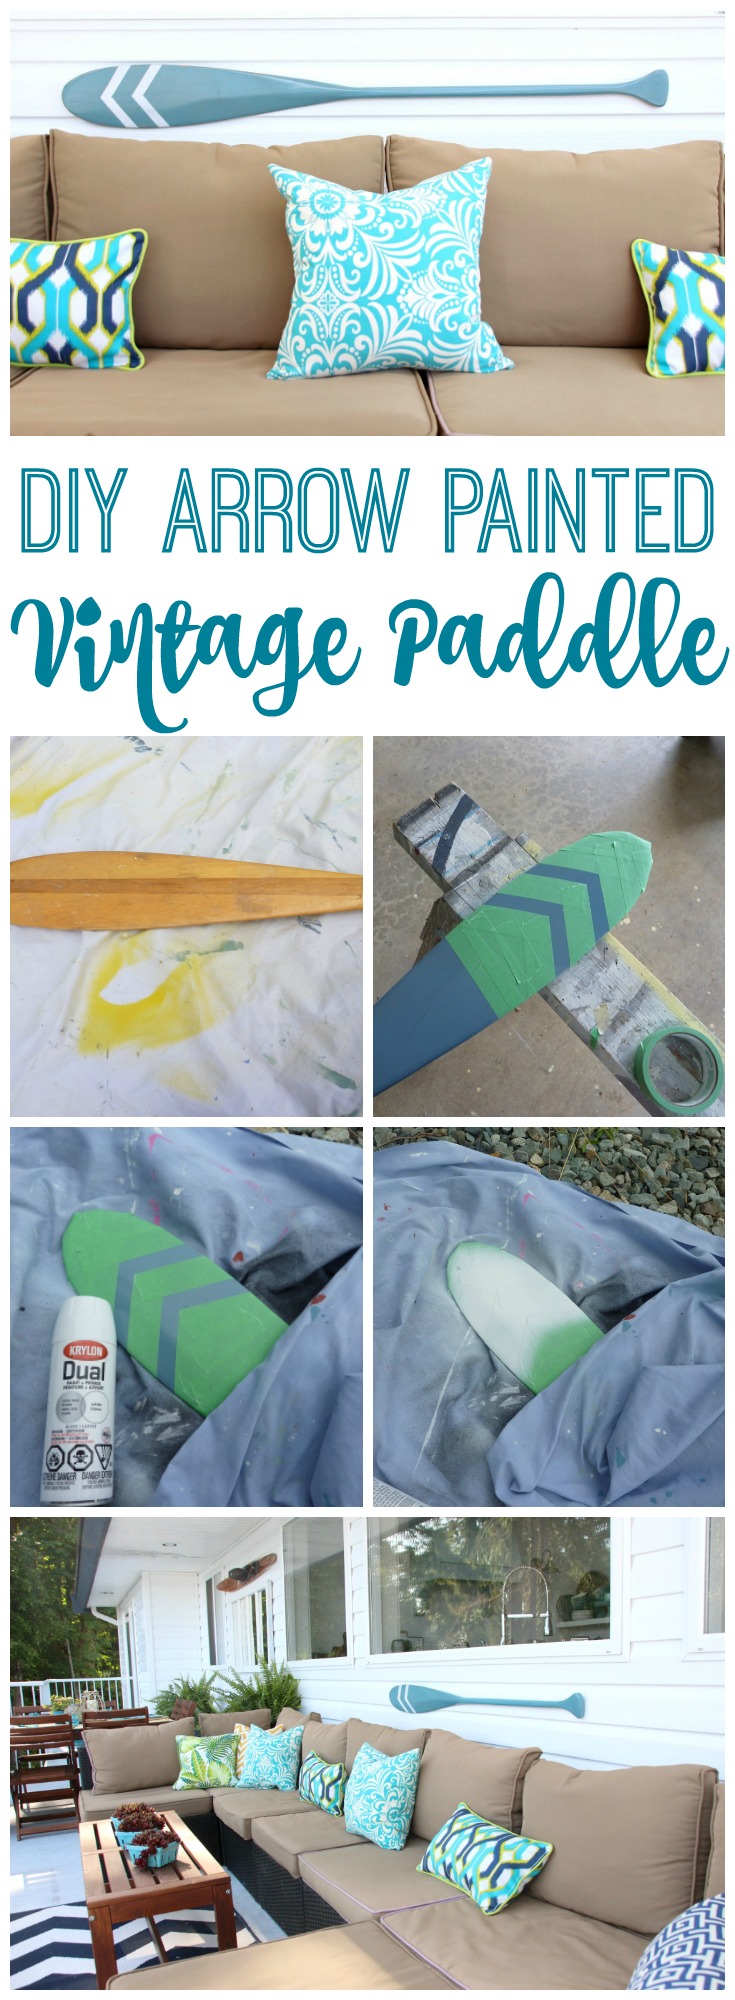 DIY Arrow Painted Vintage Paddle great deck decor poster.